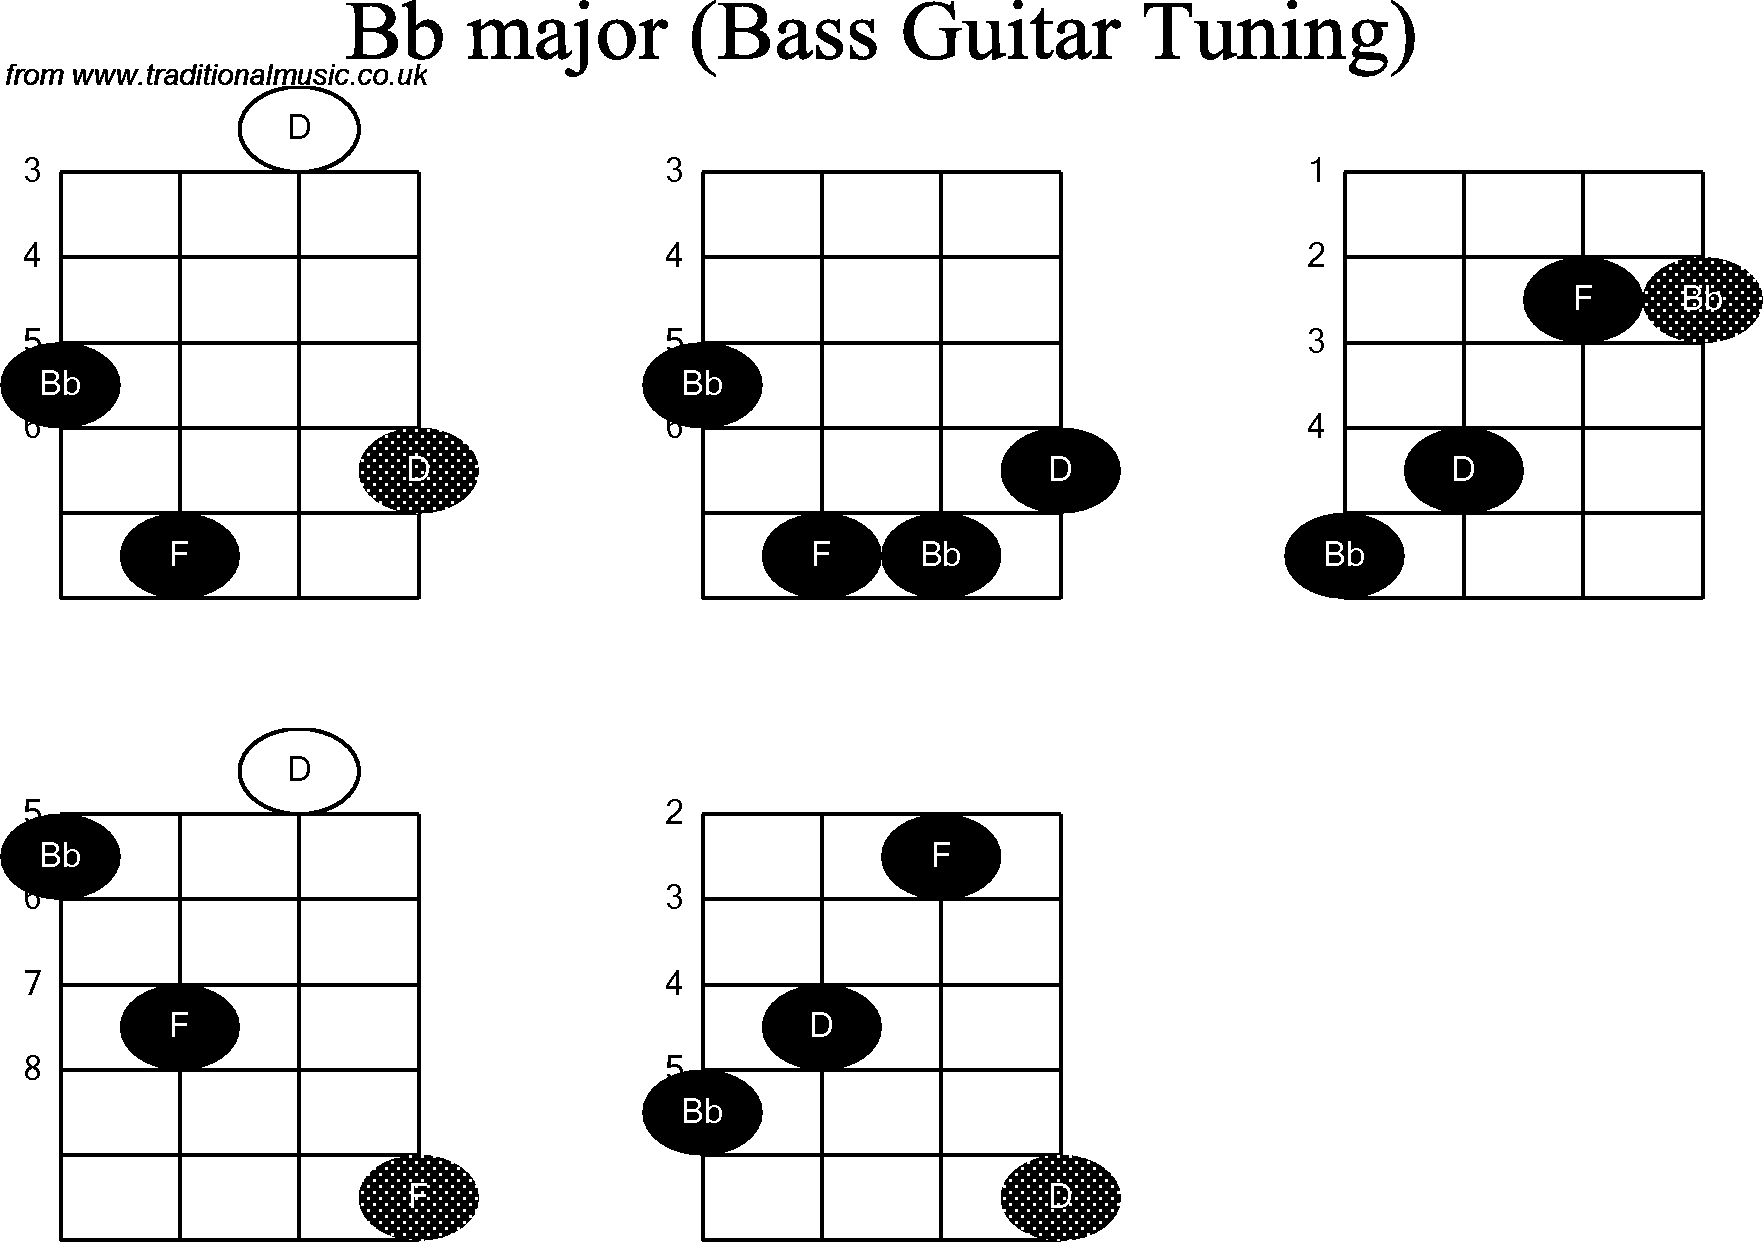 Bass Guitar chord charts for: Bb